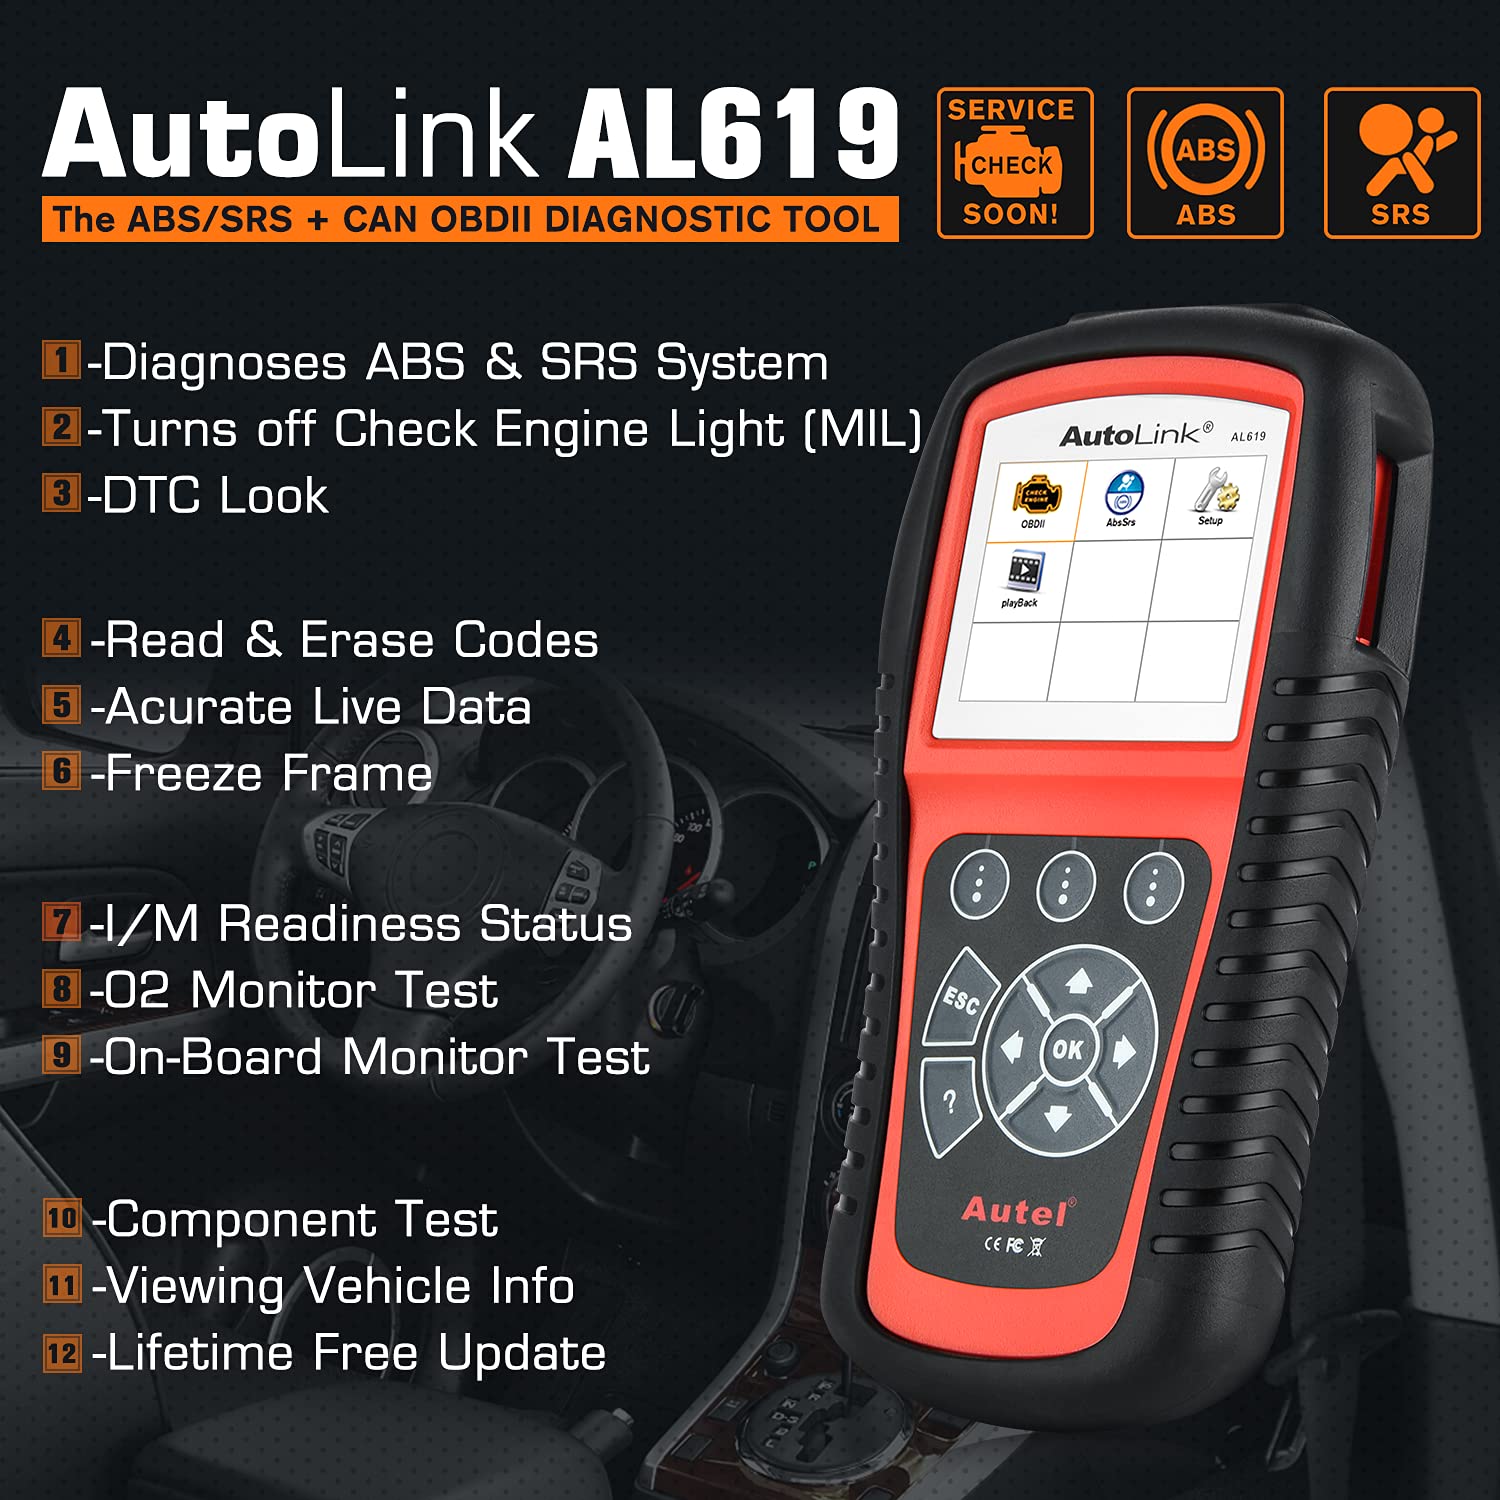 Autel AutoLink AL619 skaner OBD2 Główne cechy